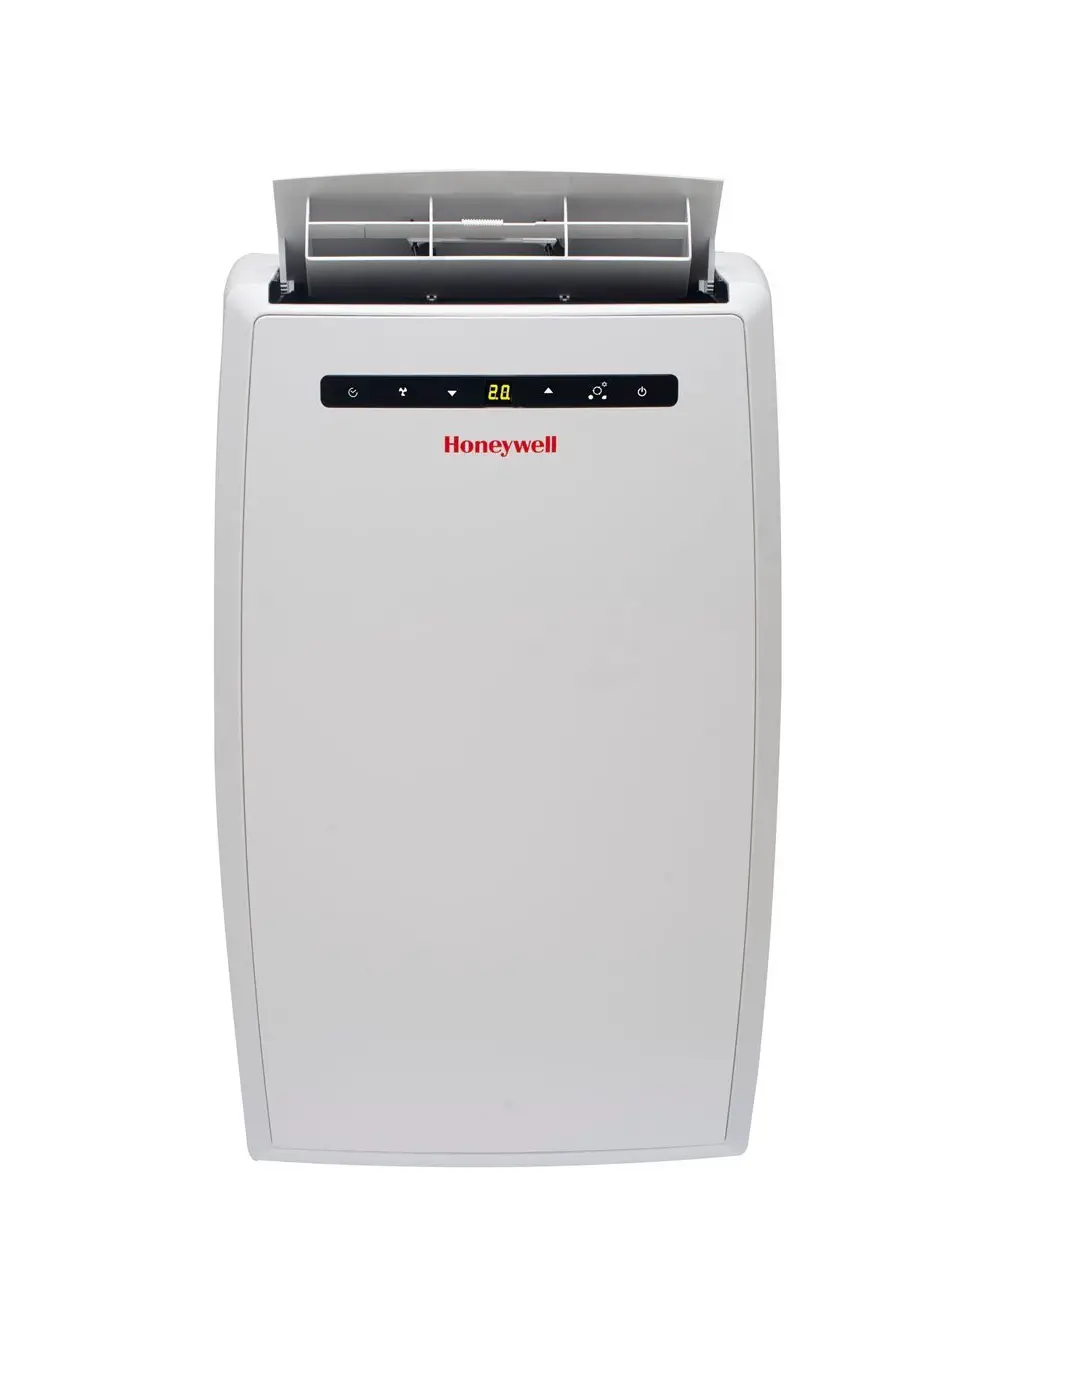 Honeywell Portable Air Conditioner User Manual [MN10CCS, MN10CHCS, MN12CCS, MN12CHCS, MN14CCS, MN14CHCS]